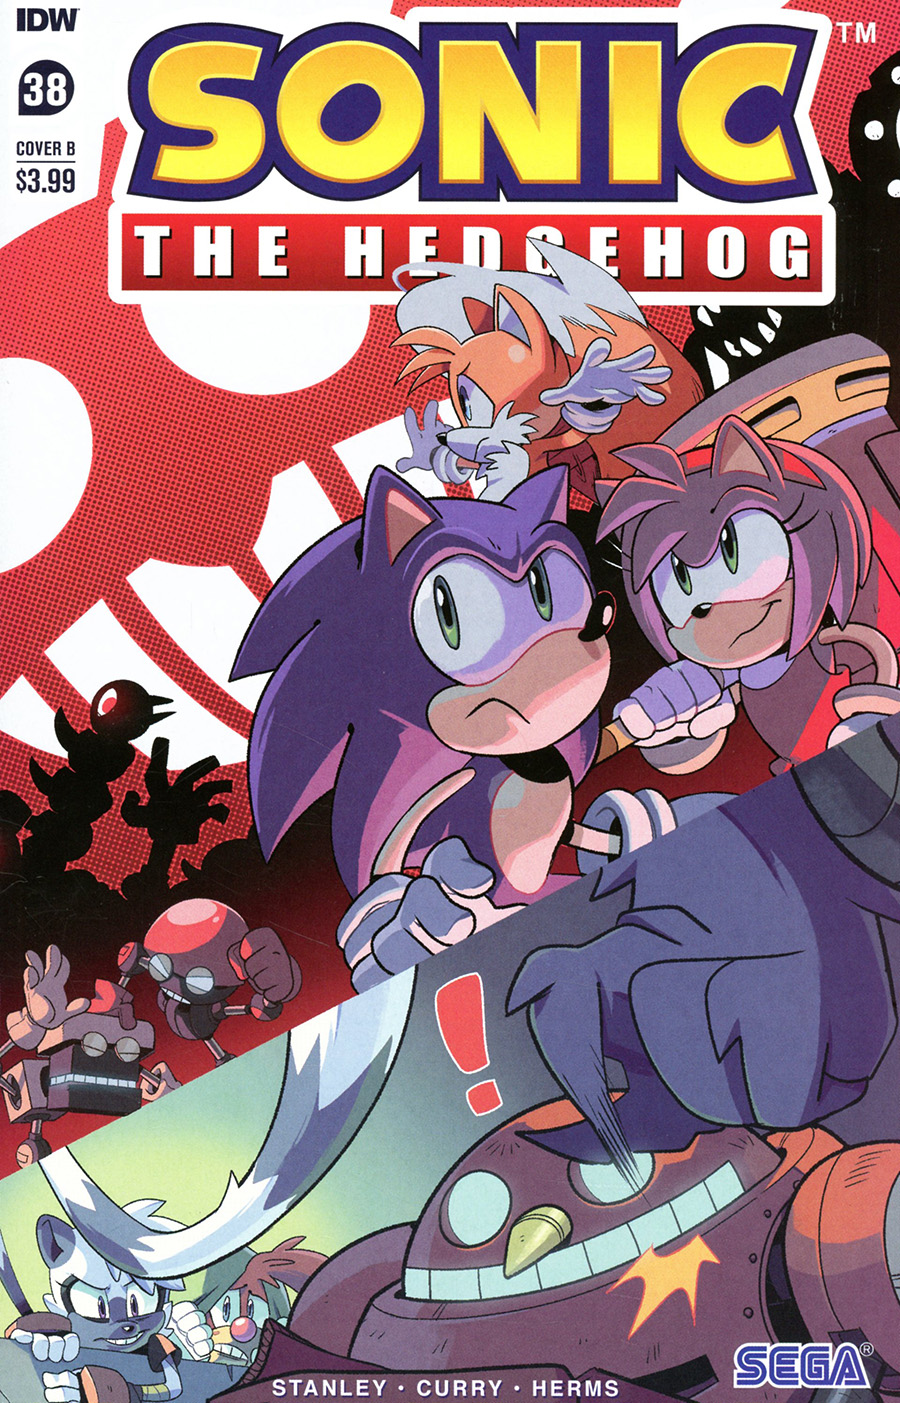 Sonic The Hedgehog Vol 3 #38 Cover B Variant Thomas Rothlisberger Cover